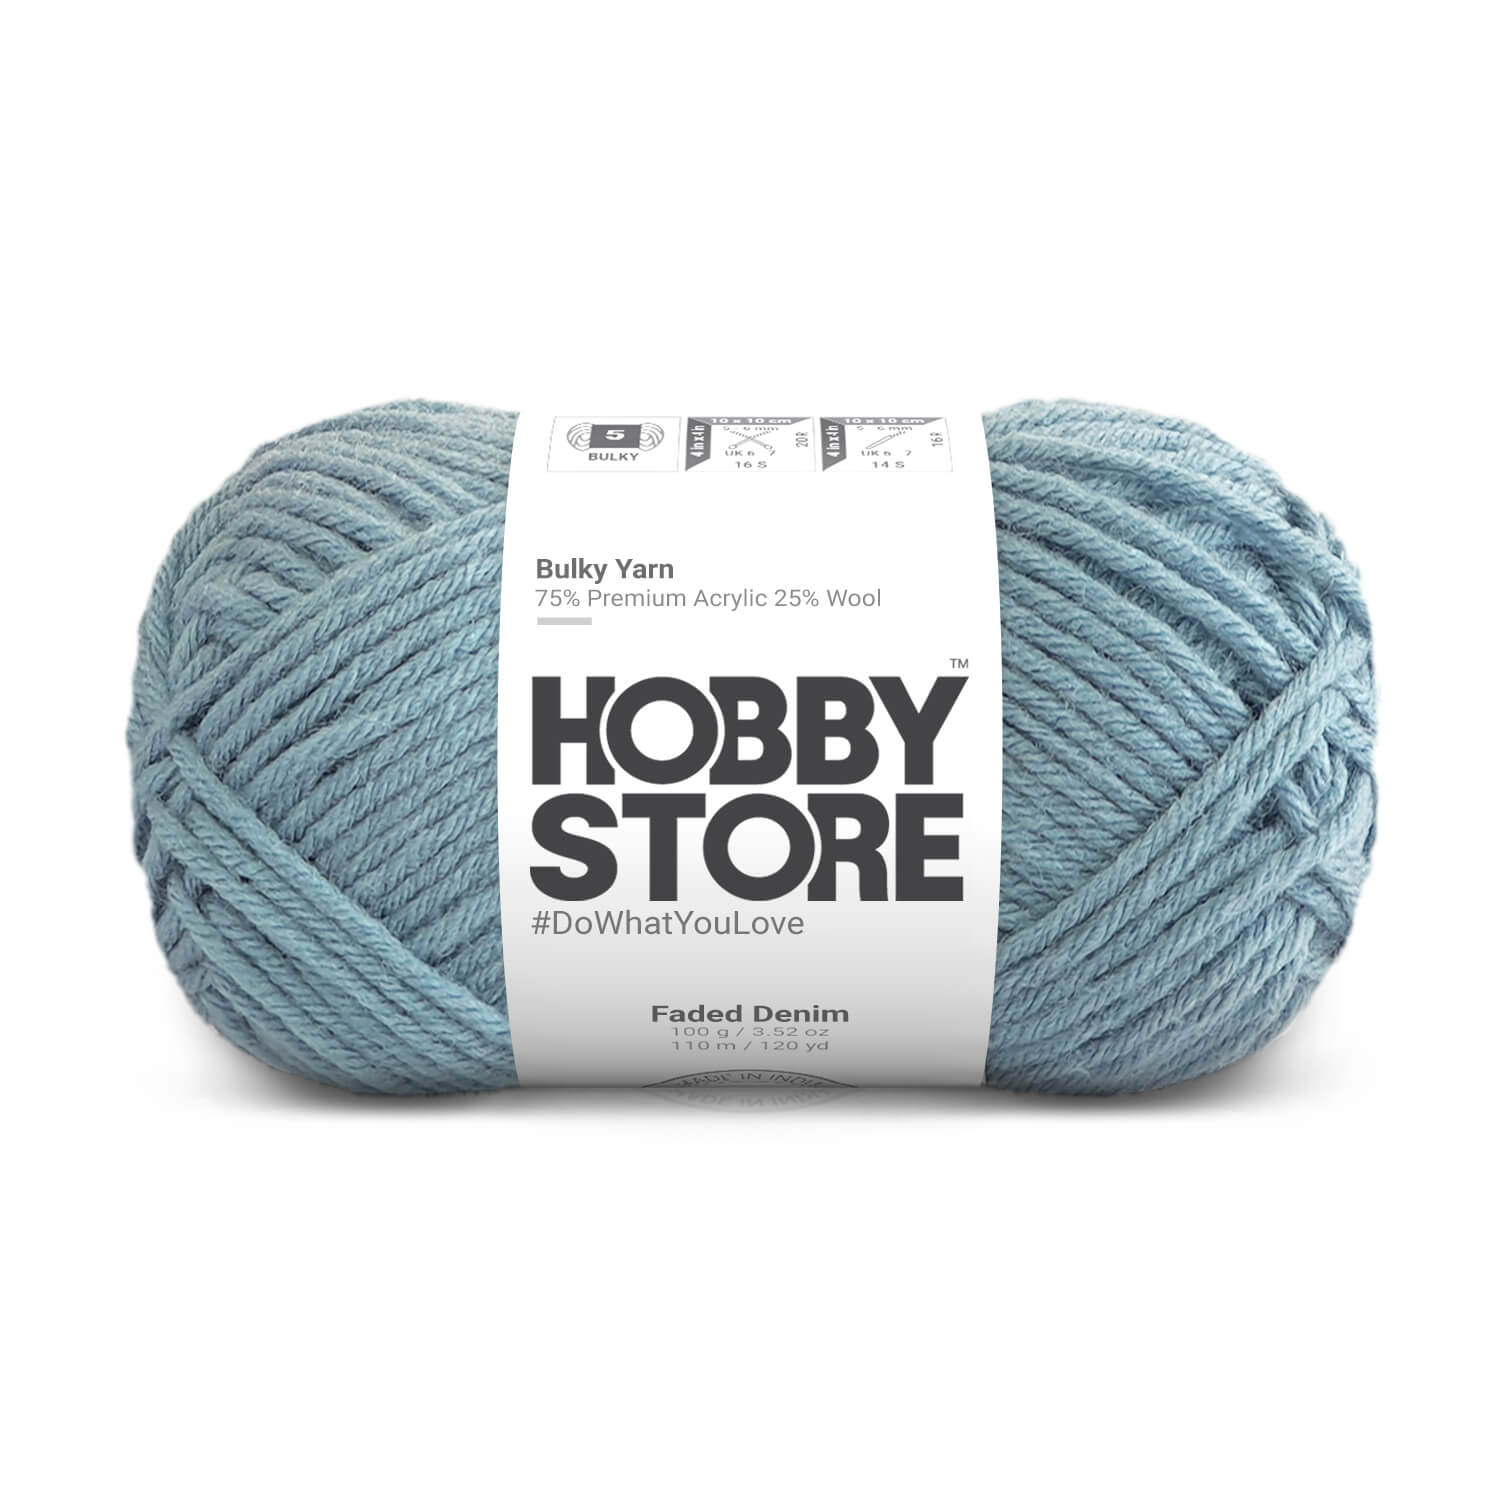 Bulky Yarn by Hobby Store - Faded Denim 6009